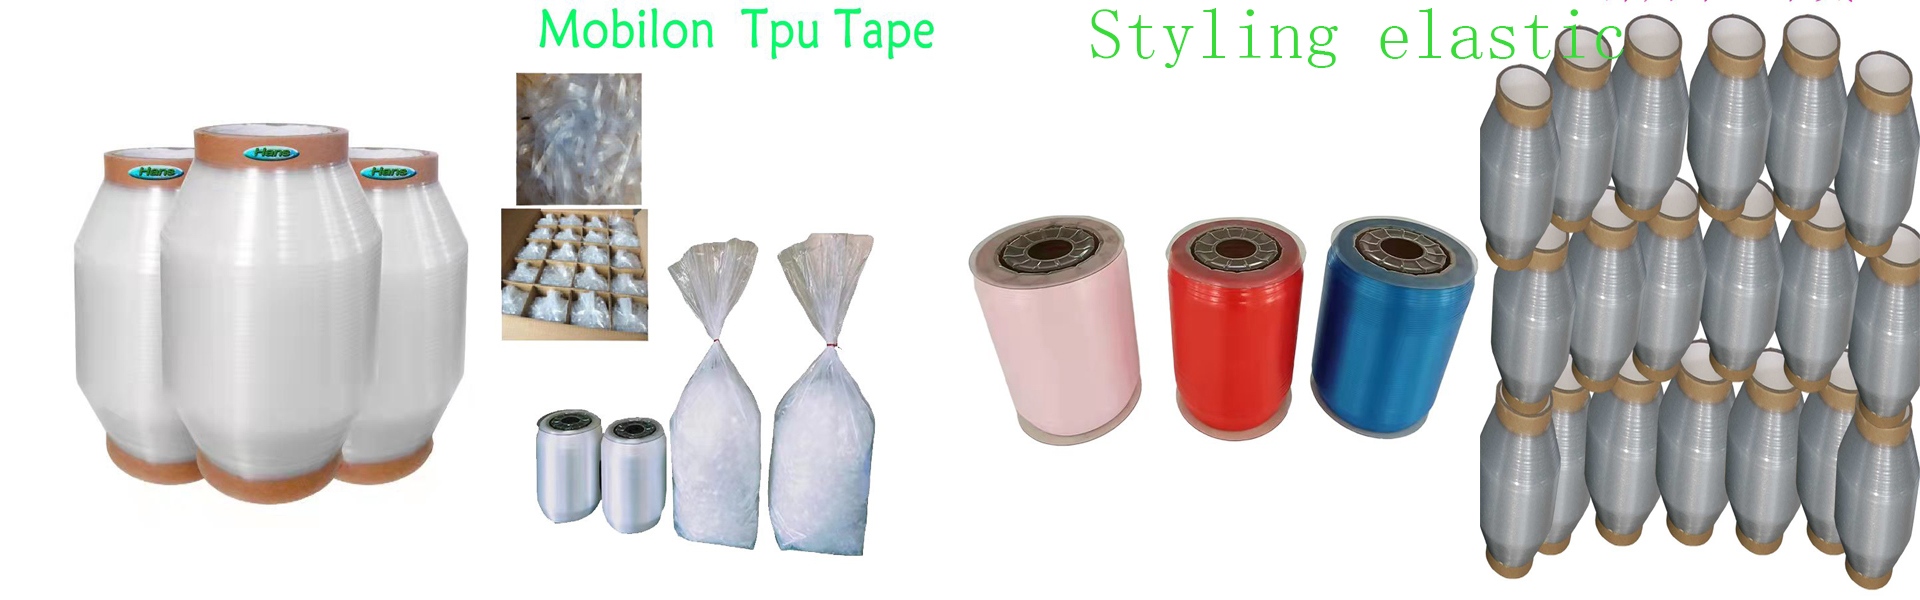 Tape Mobilone, bandoulière transparent, film TPU,Dongguan Changan Tusheng Garment Accessories Co., Ltd.